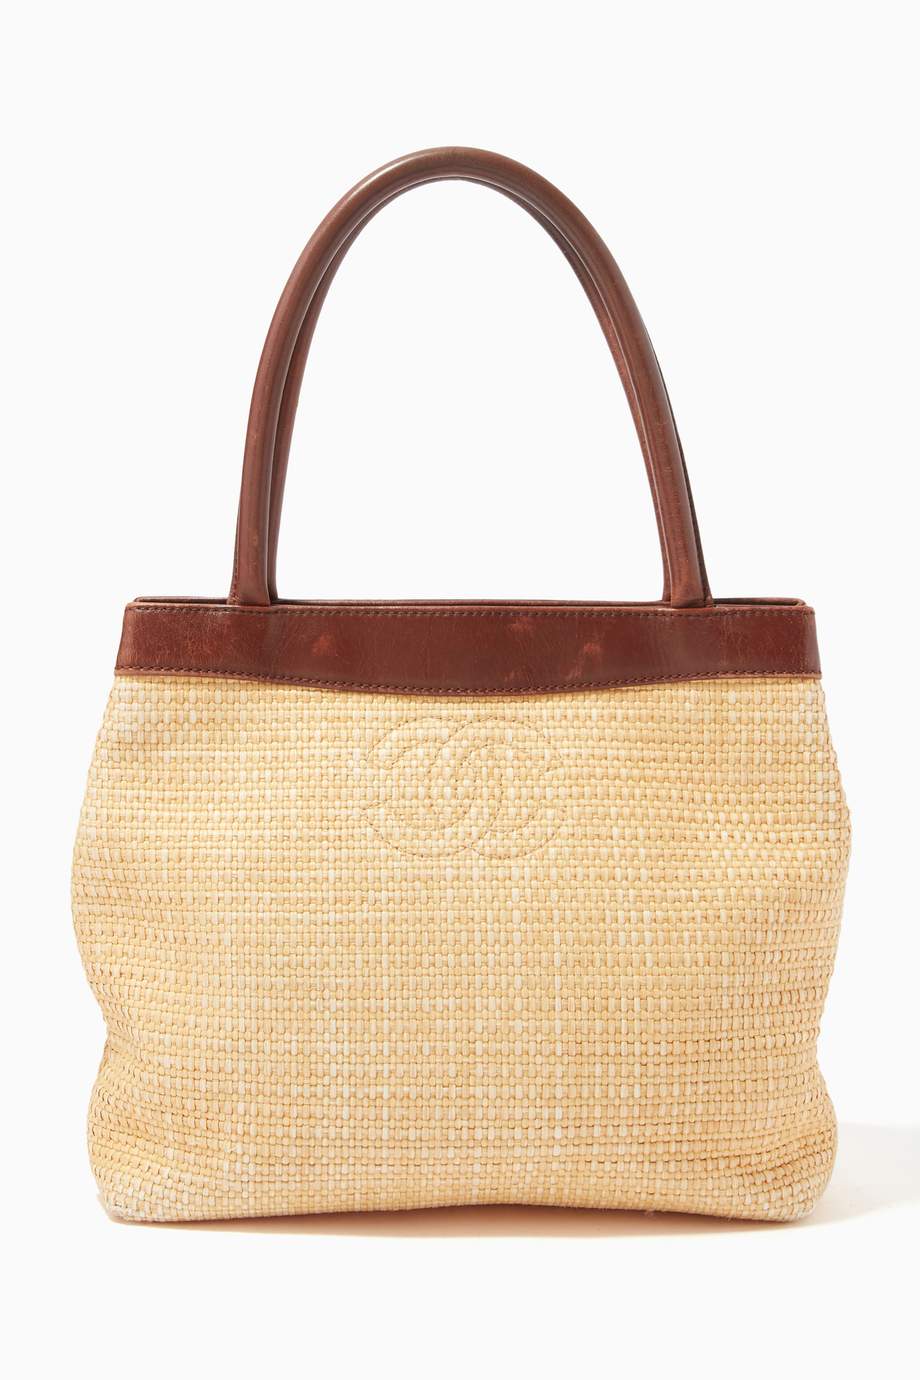 Shop Chanel Vintage Neutral Basket Bag in Raffia & Leather for Women | Ounass UAE